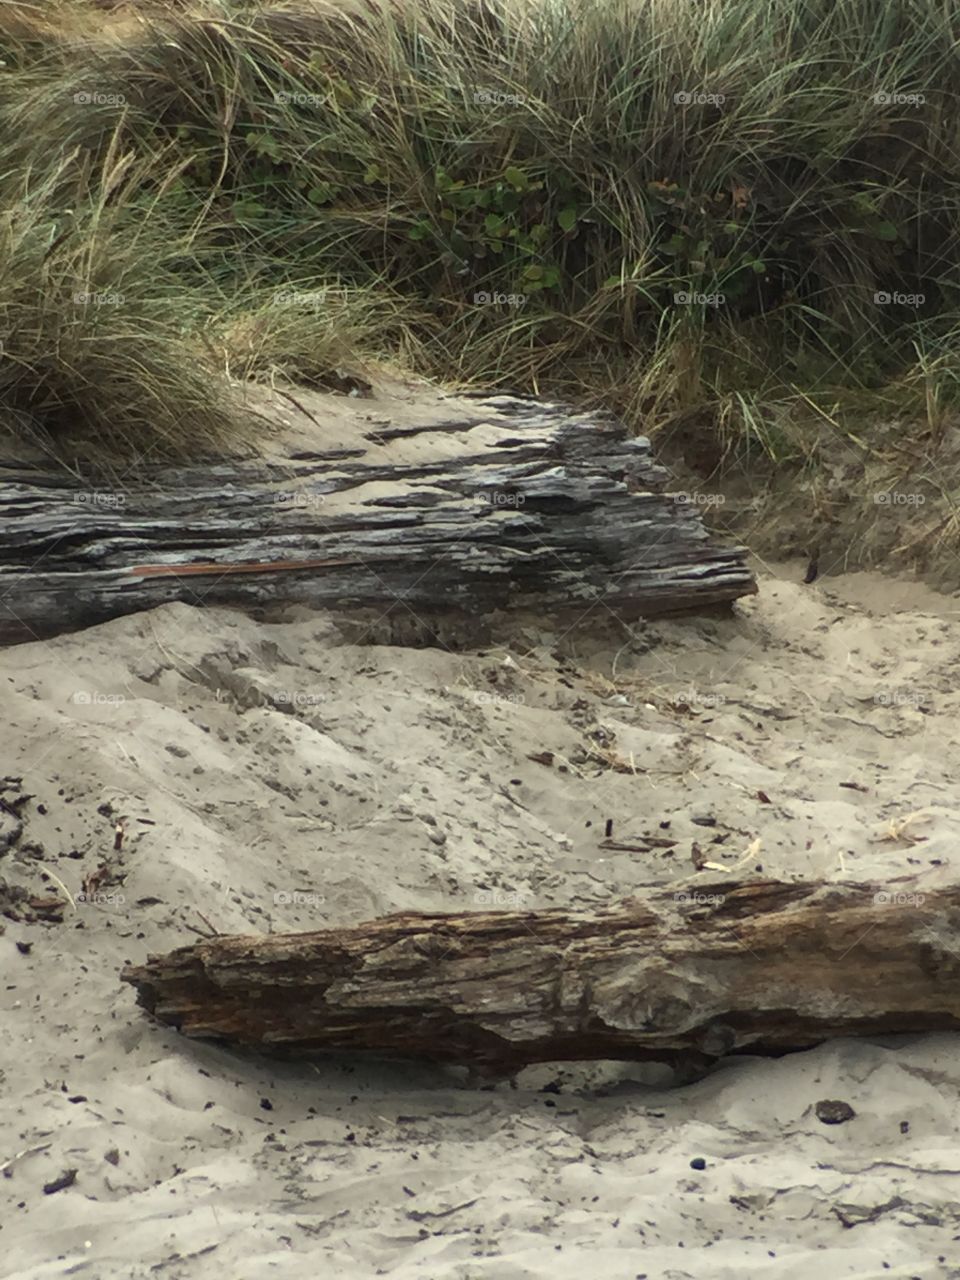 Coastal Driftwood